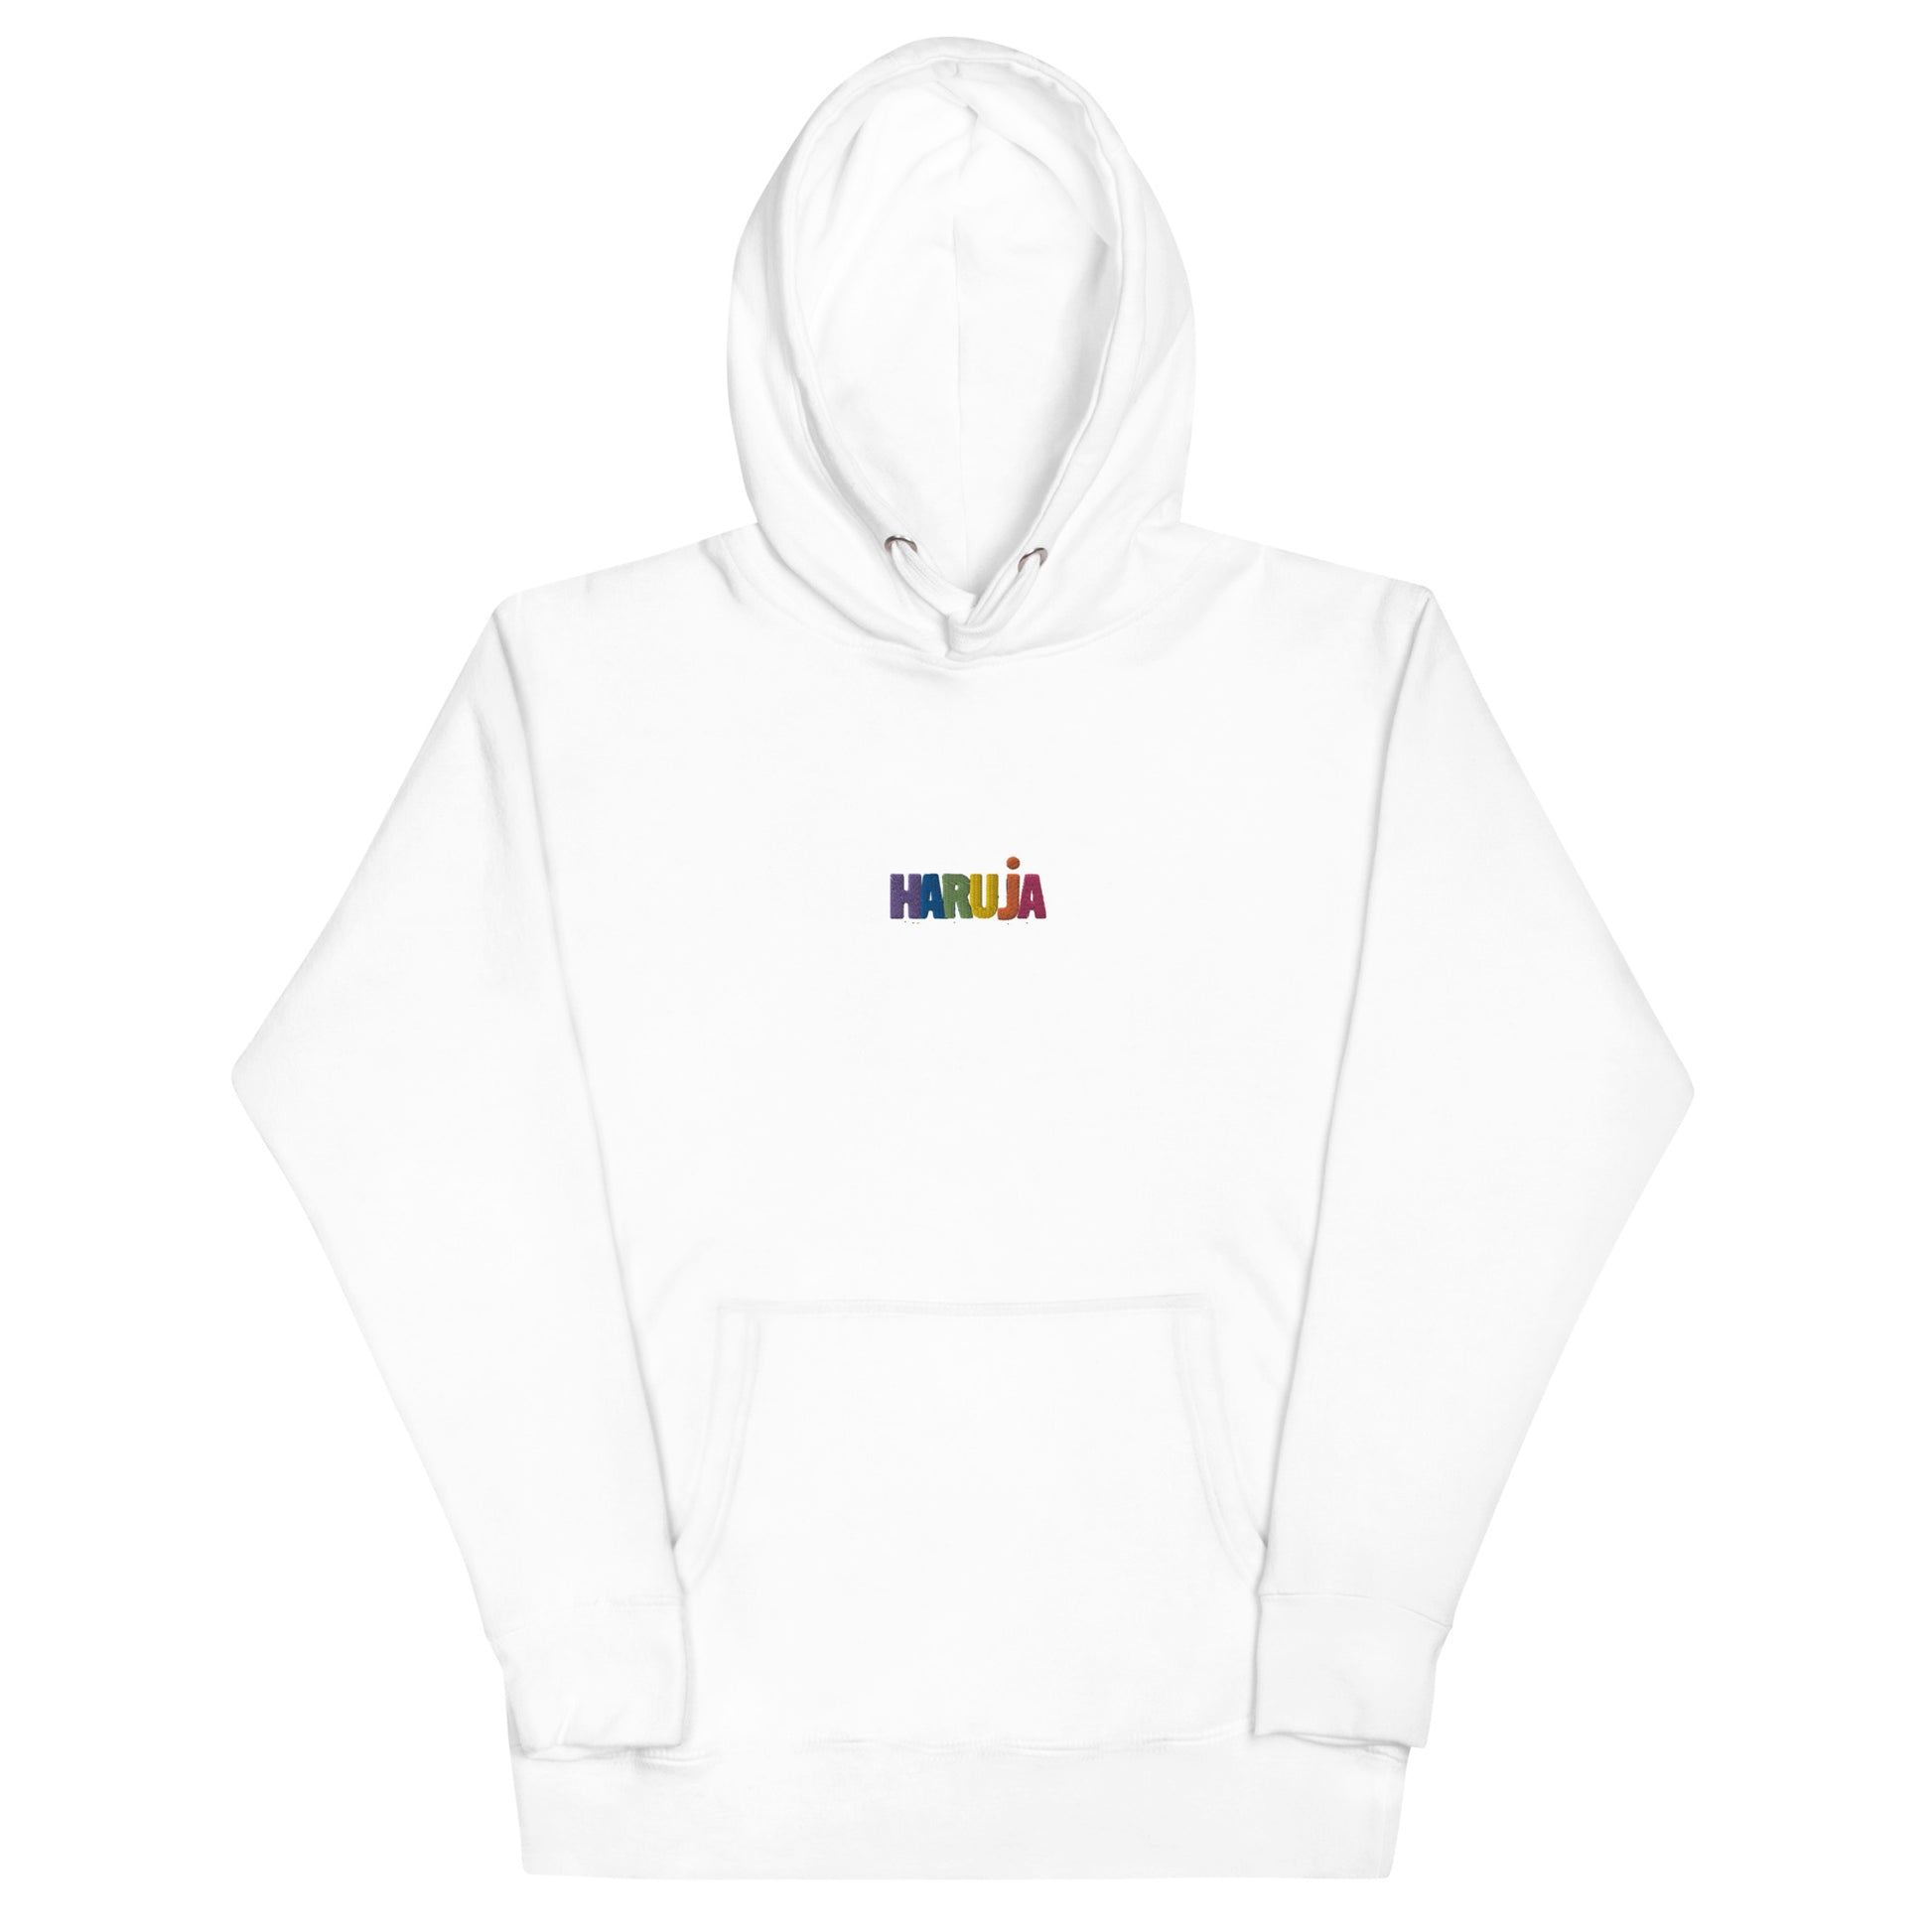 Haruja - Multicolored Embroidered white hoodie